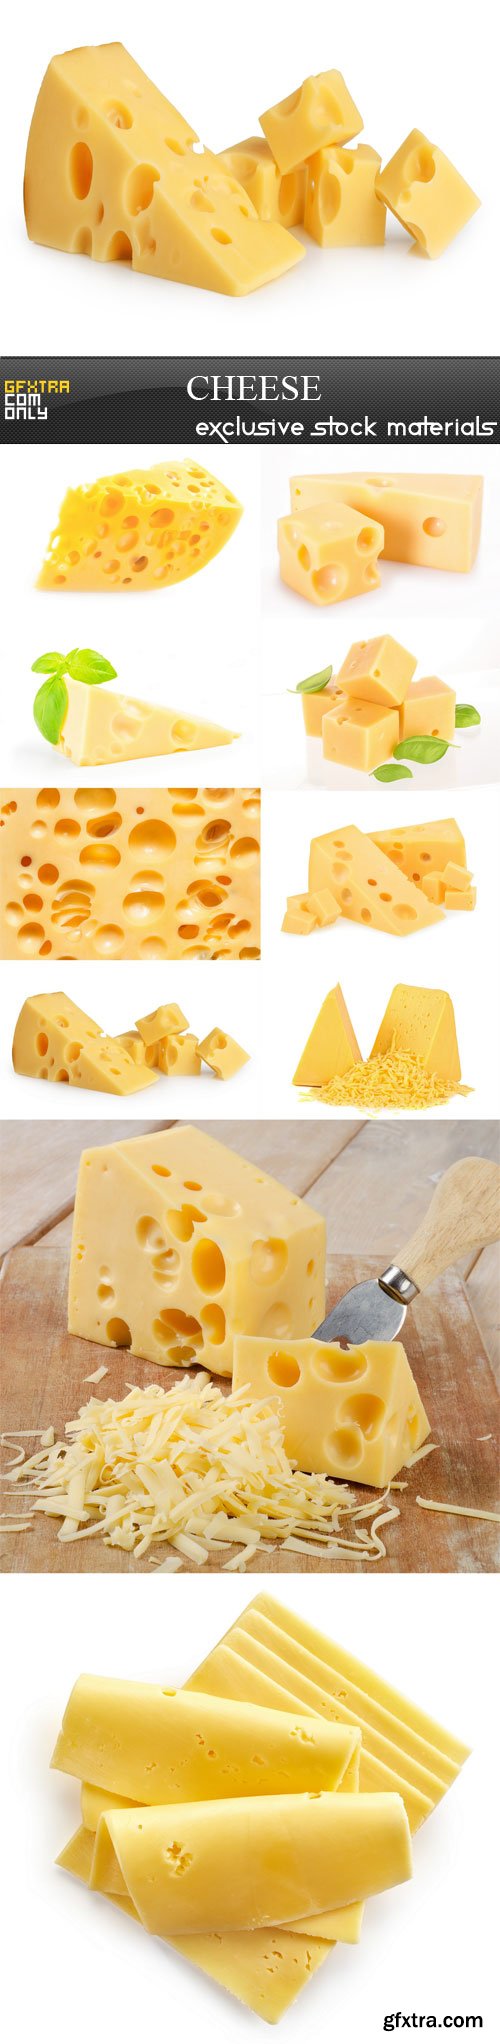 Cheese, 10 UHQ JPEG